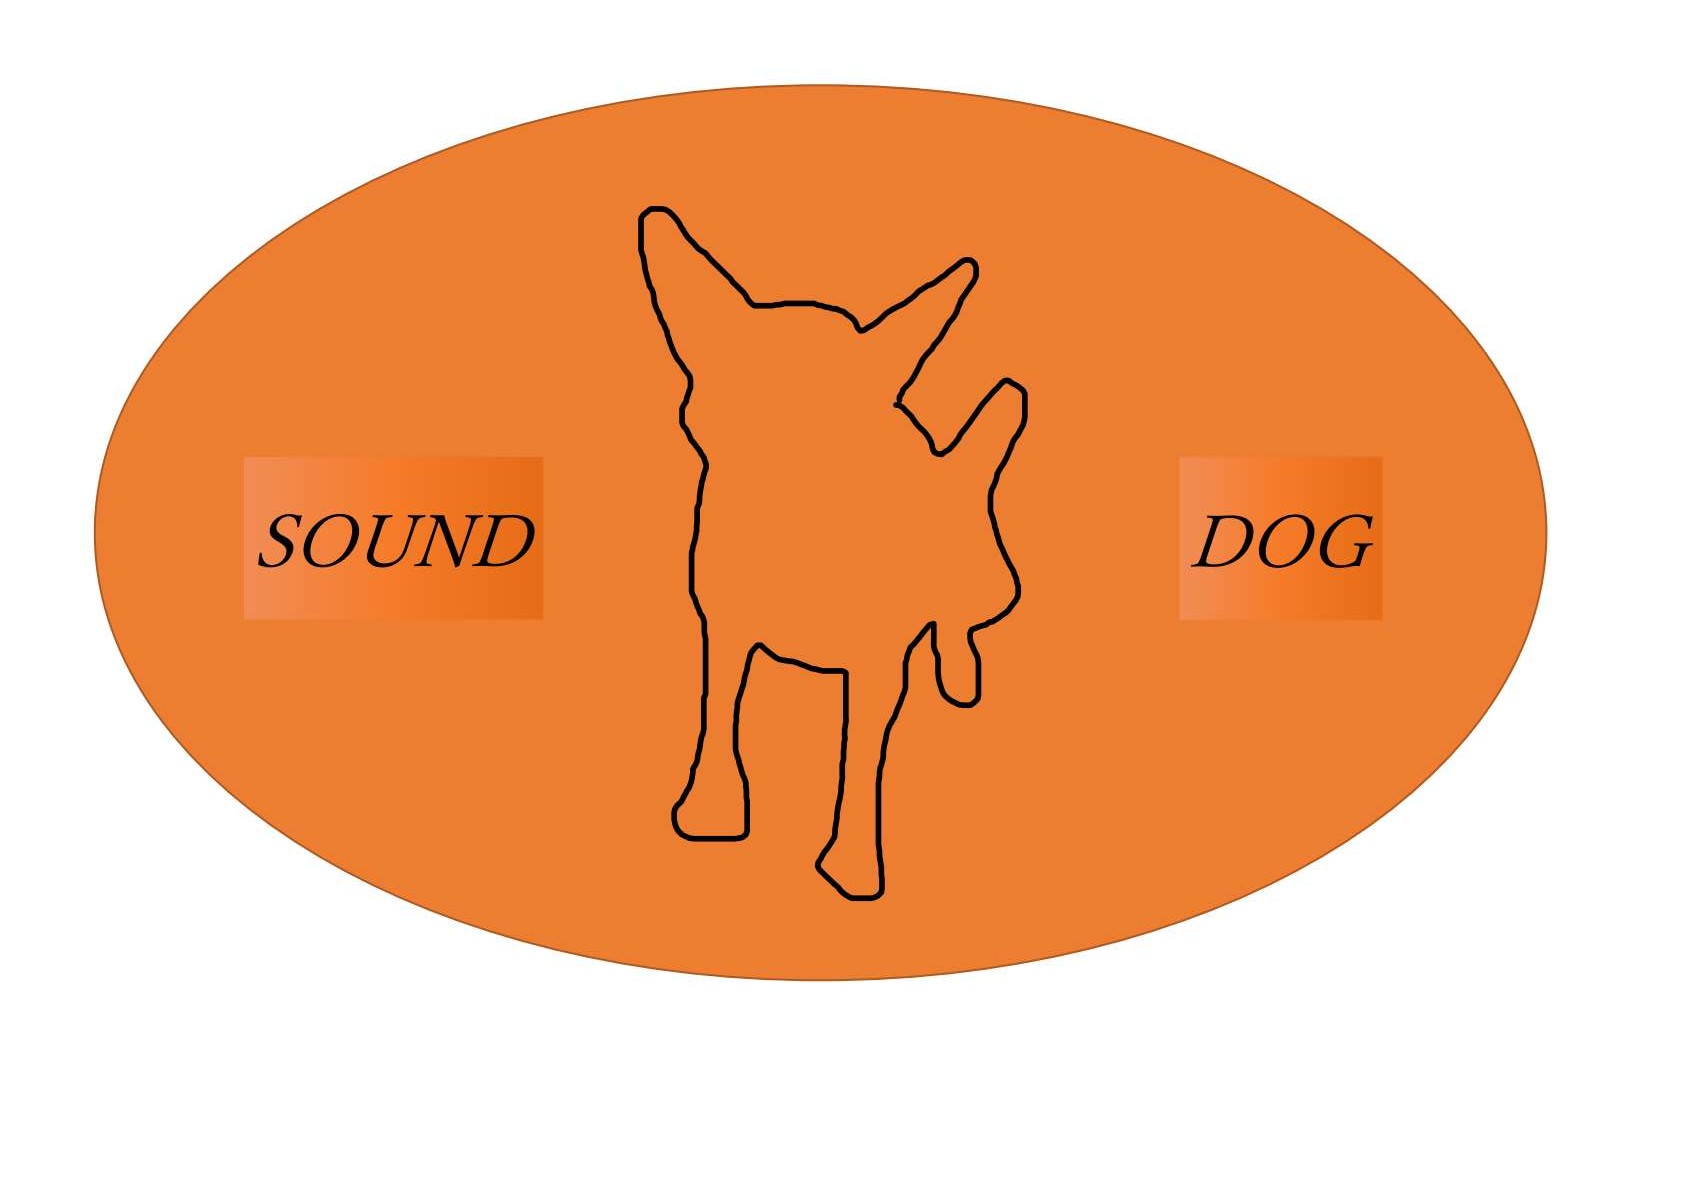 sounddog dog noices